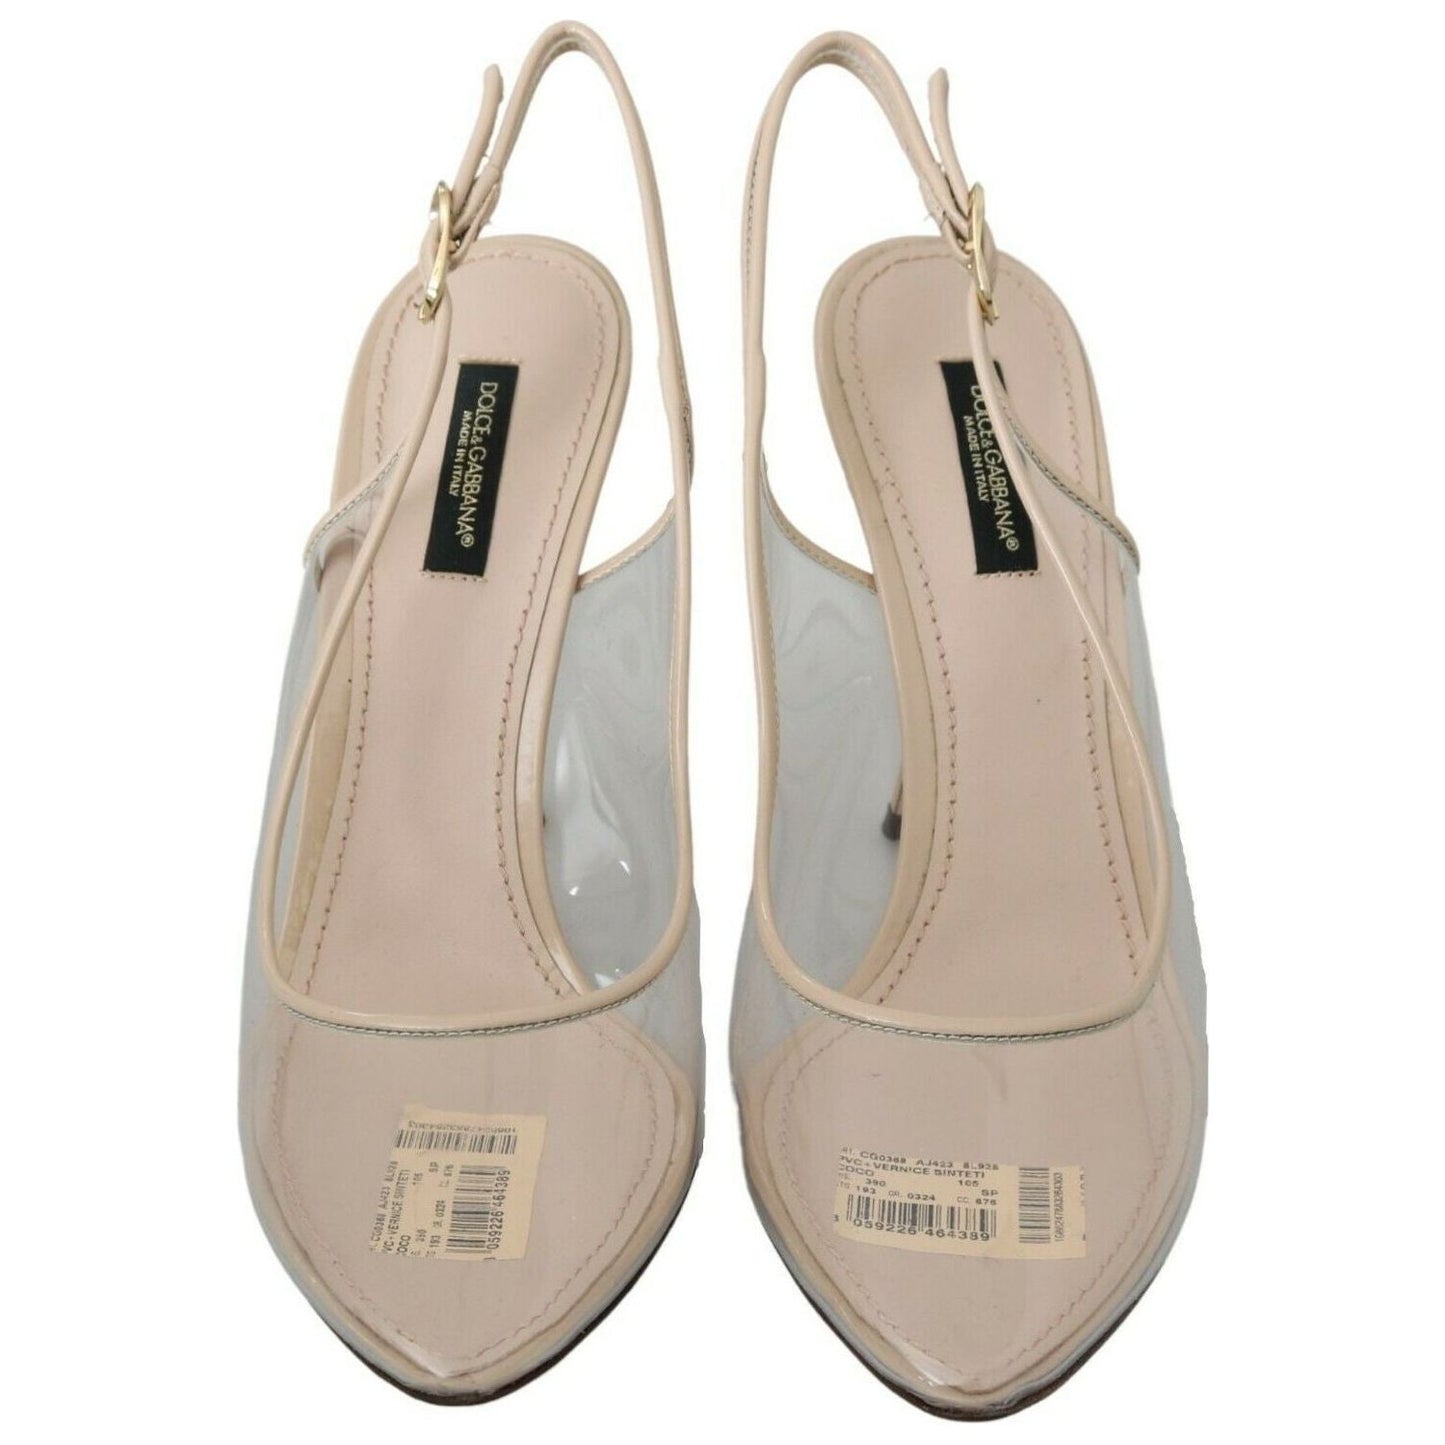 Dolce & Gabbana Elegant Nude Beige Slingback Heels dolce-gabbana-slingback-pvc-beige-clear-high-heels-shoes WOMAN PUMPS s-l1600-2022-11-16T104037.329-ea7b41c1-837.jpg